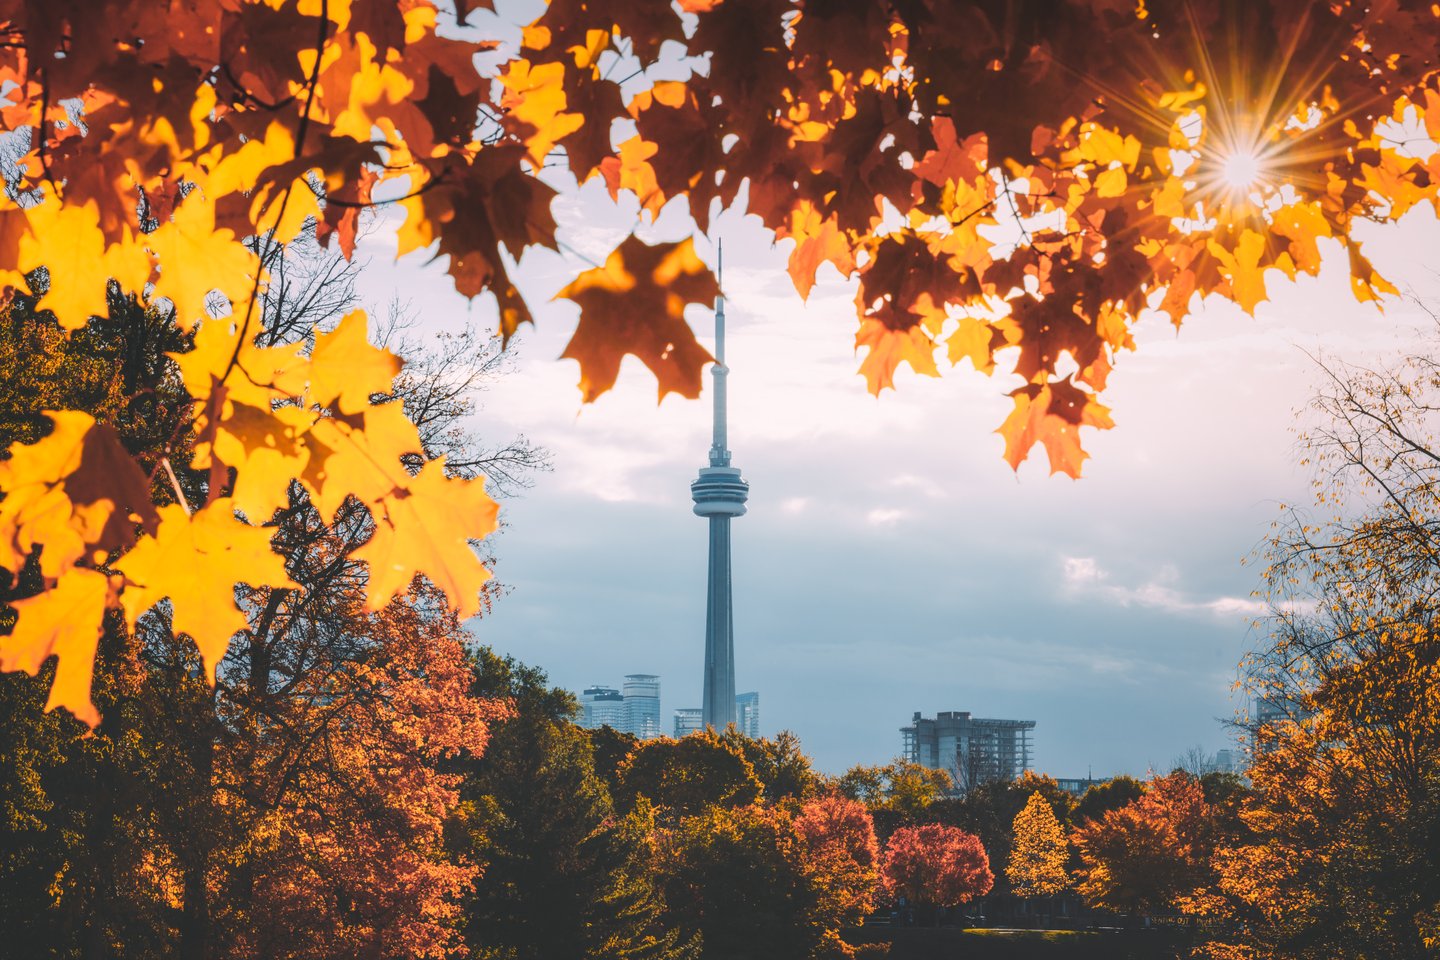 Toronto in the fall